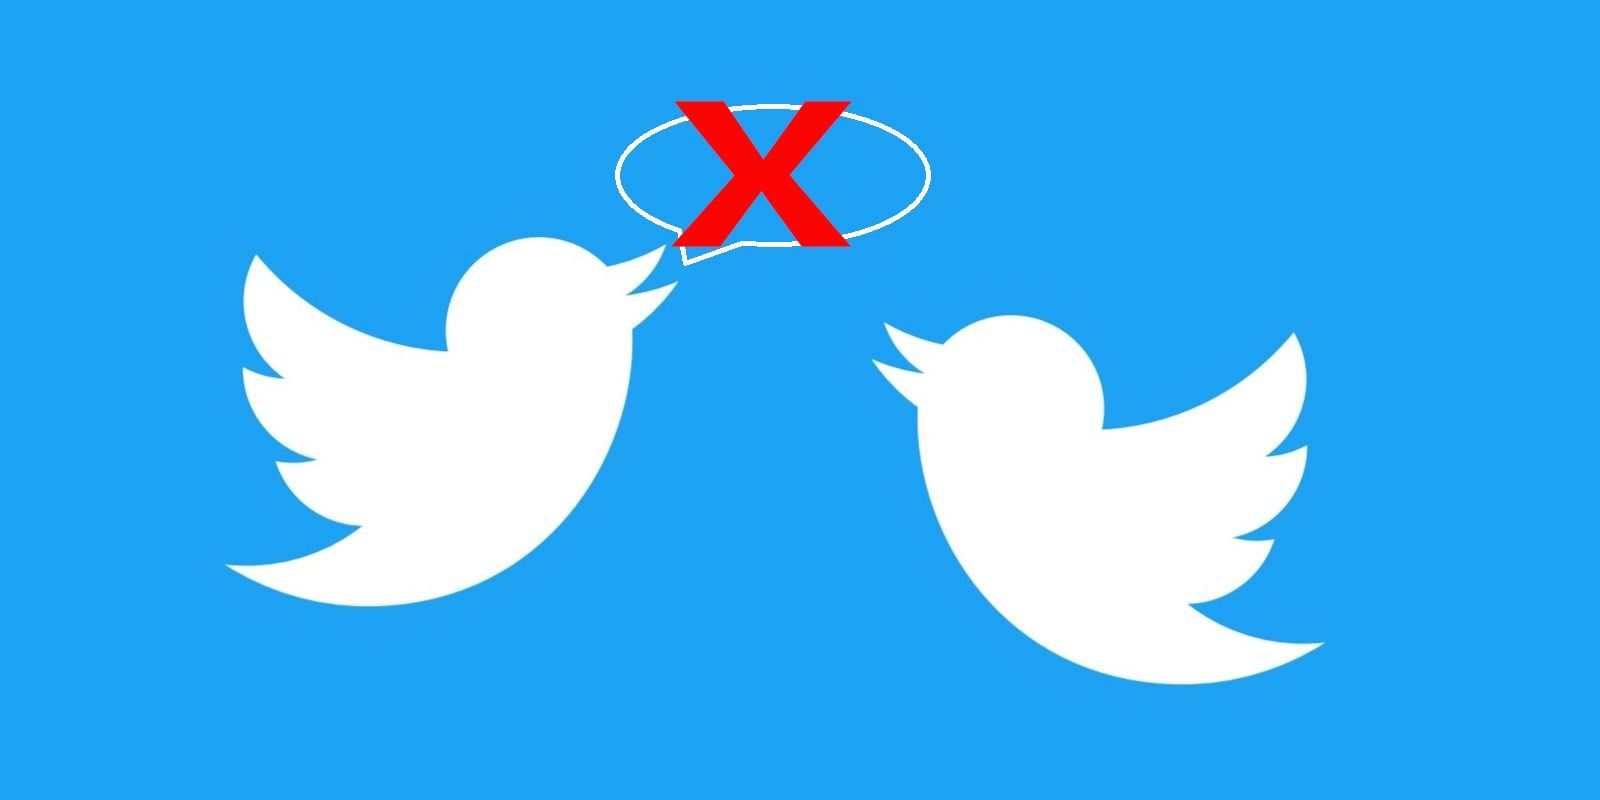 Twitter banned language